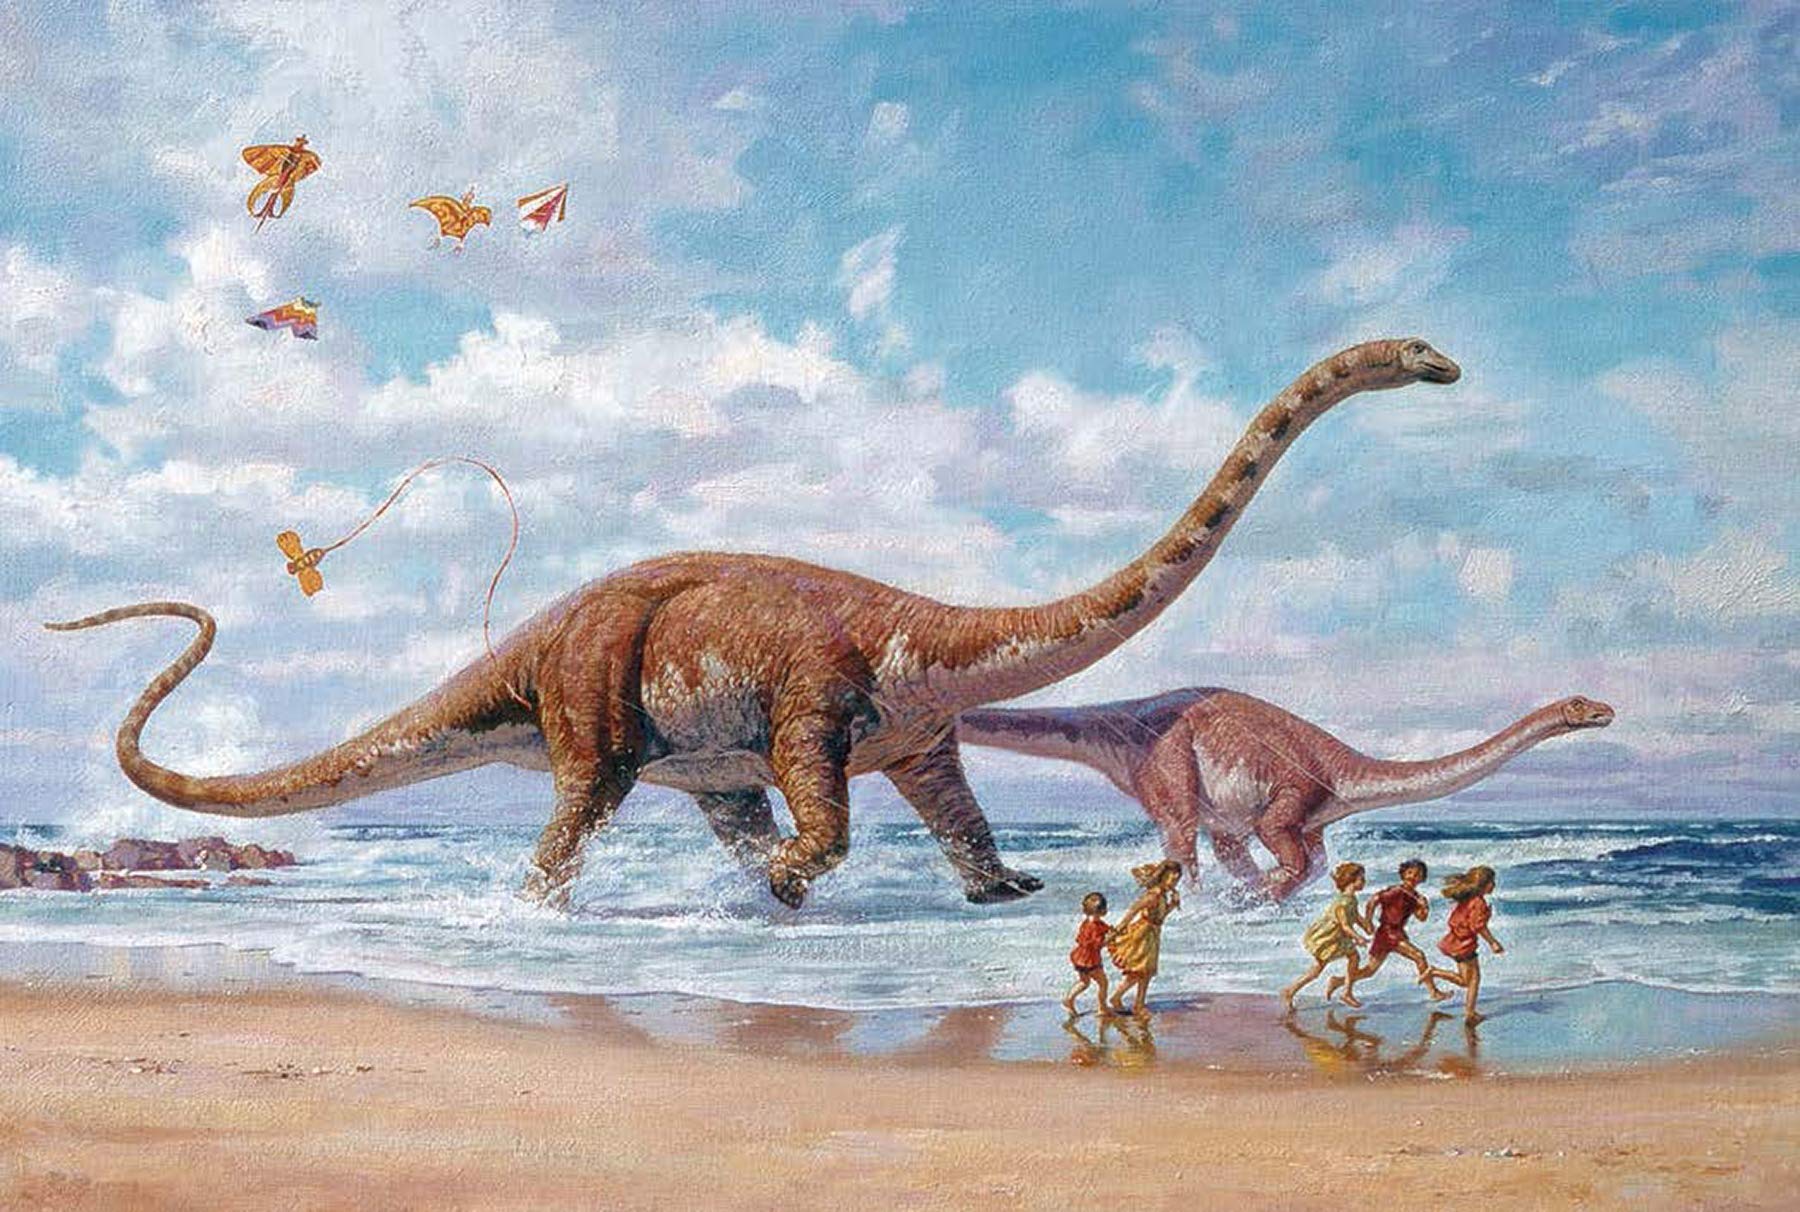 CollectA Protoceratops (Bix from Dinotopia) by Paintingdinos DinotopiaSeasideRomp_41ca3ec0-18e4-4b76-ae76-748ac606db97_1024x1024@2x